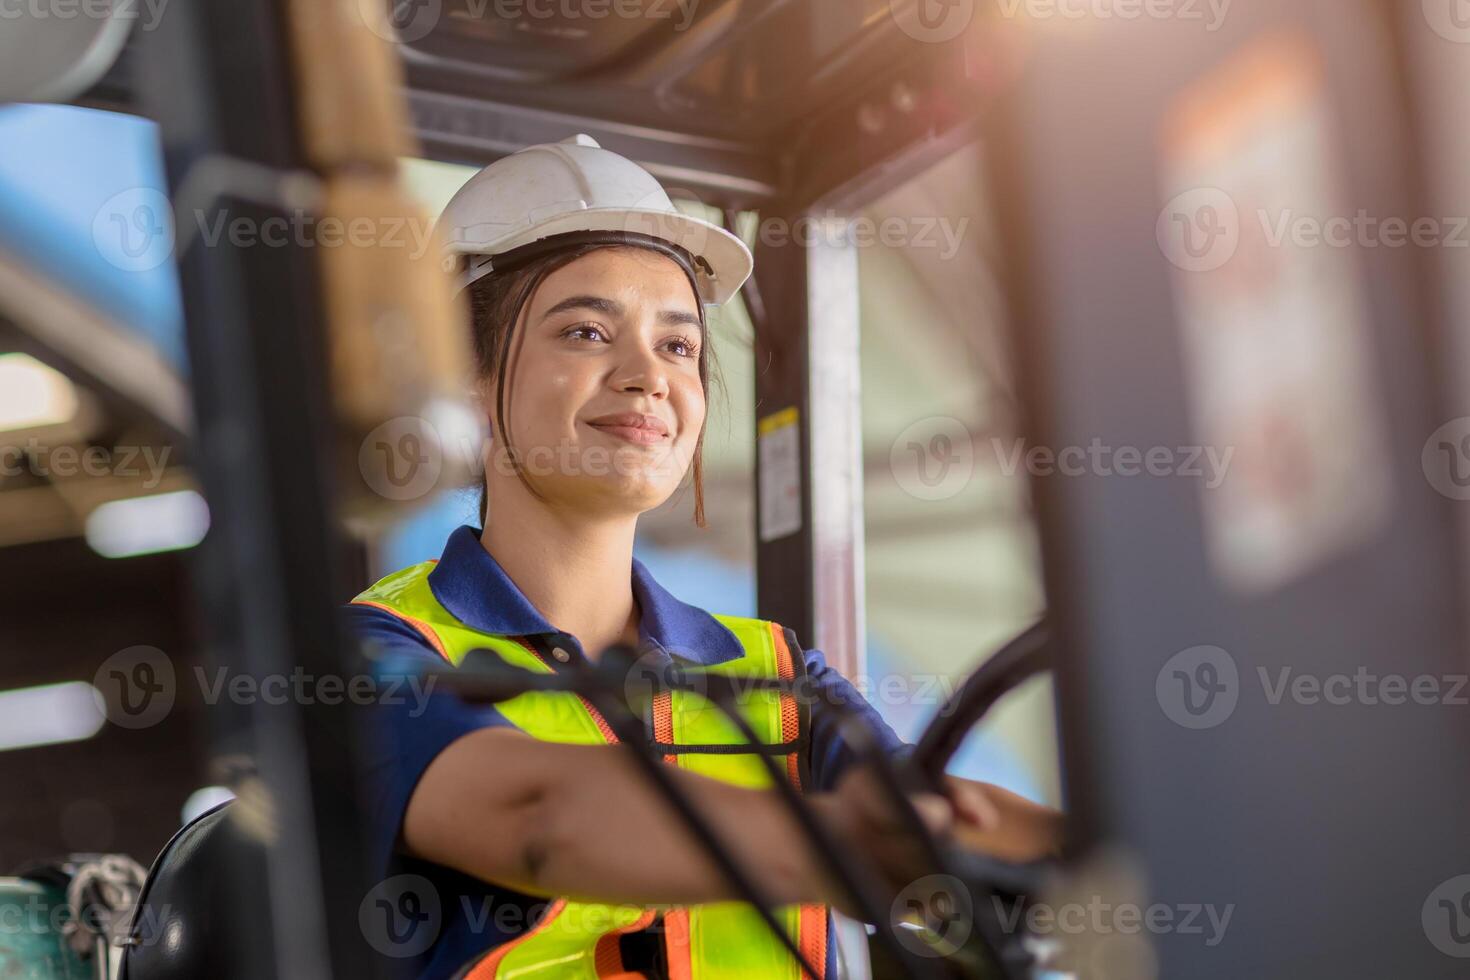 Indisch vrouw arbeider magazijn heftruck bestuurder personeel gelukkig glimlachen genieten werken foto